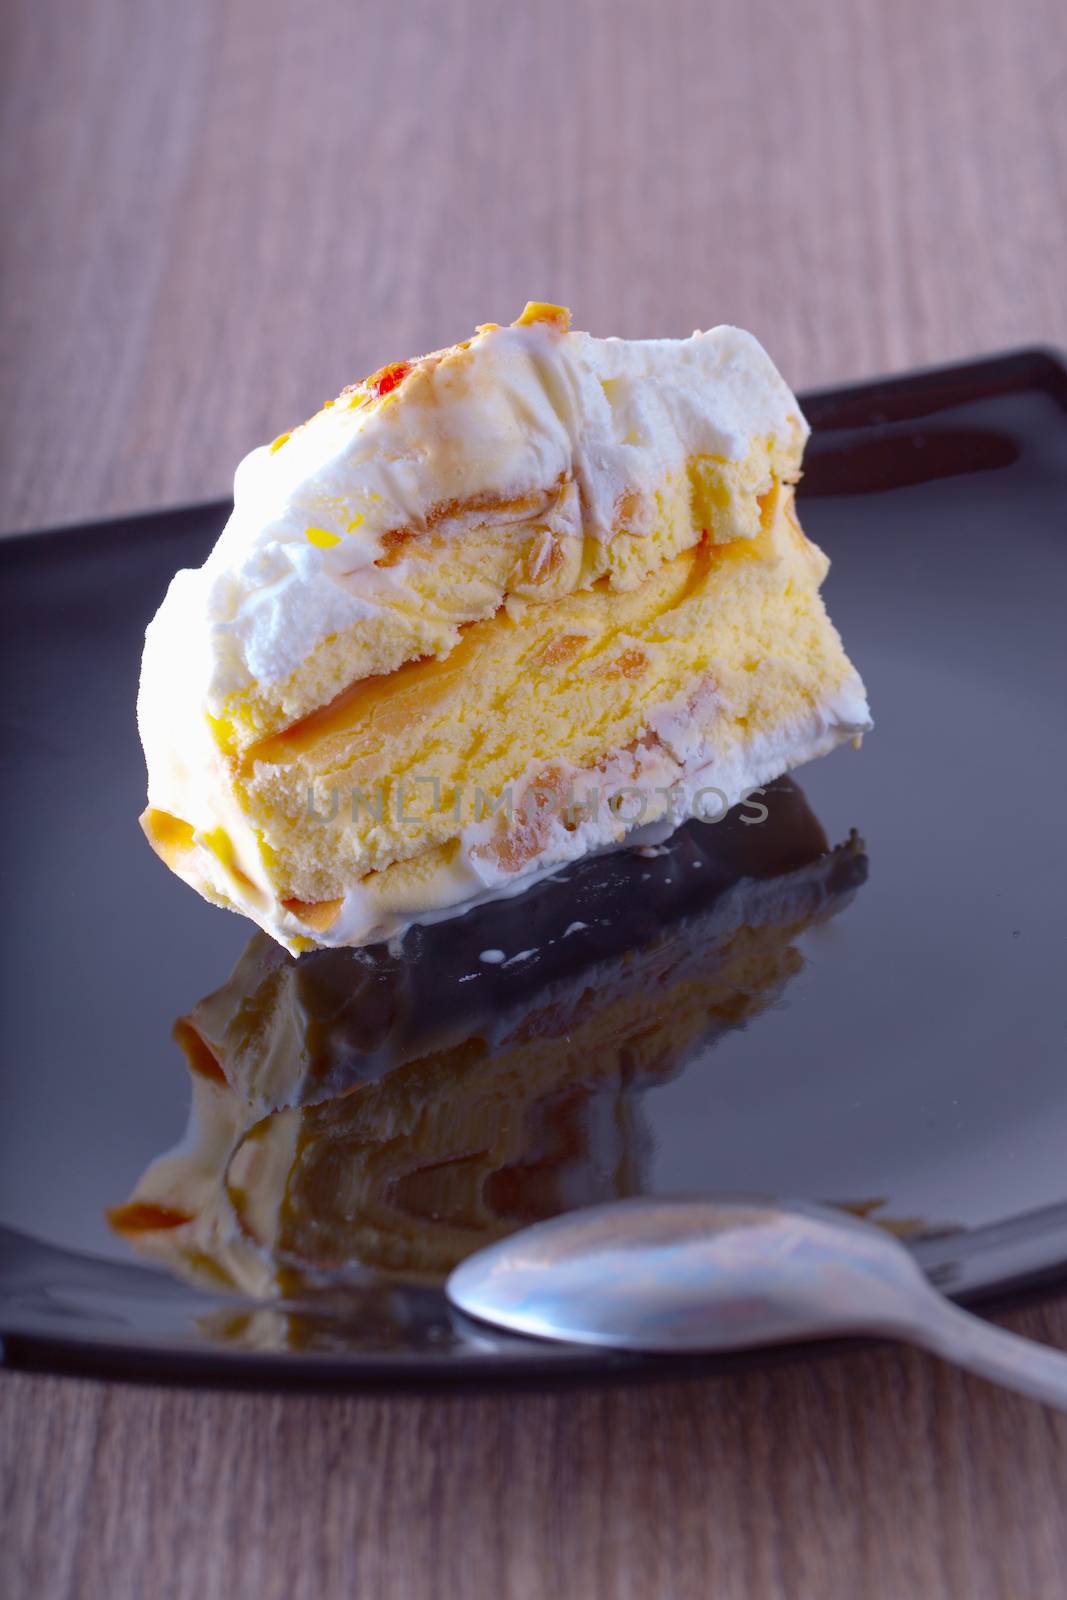 Ice cream cake by Koufax73